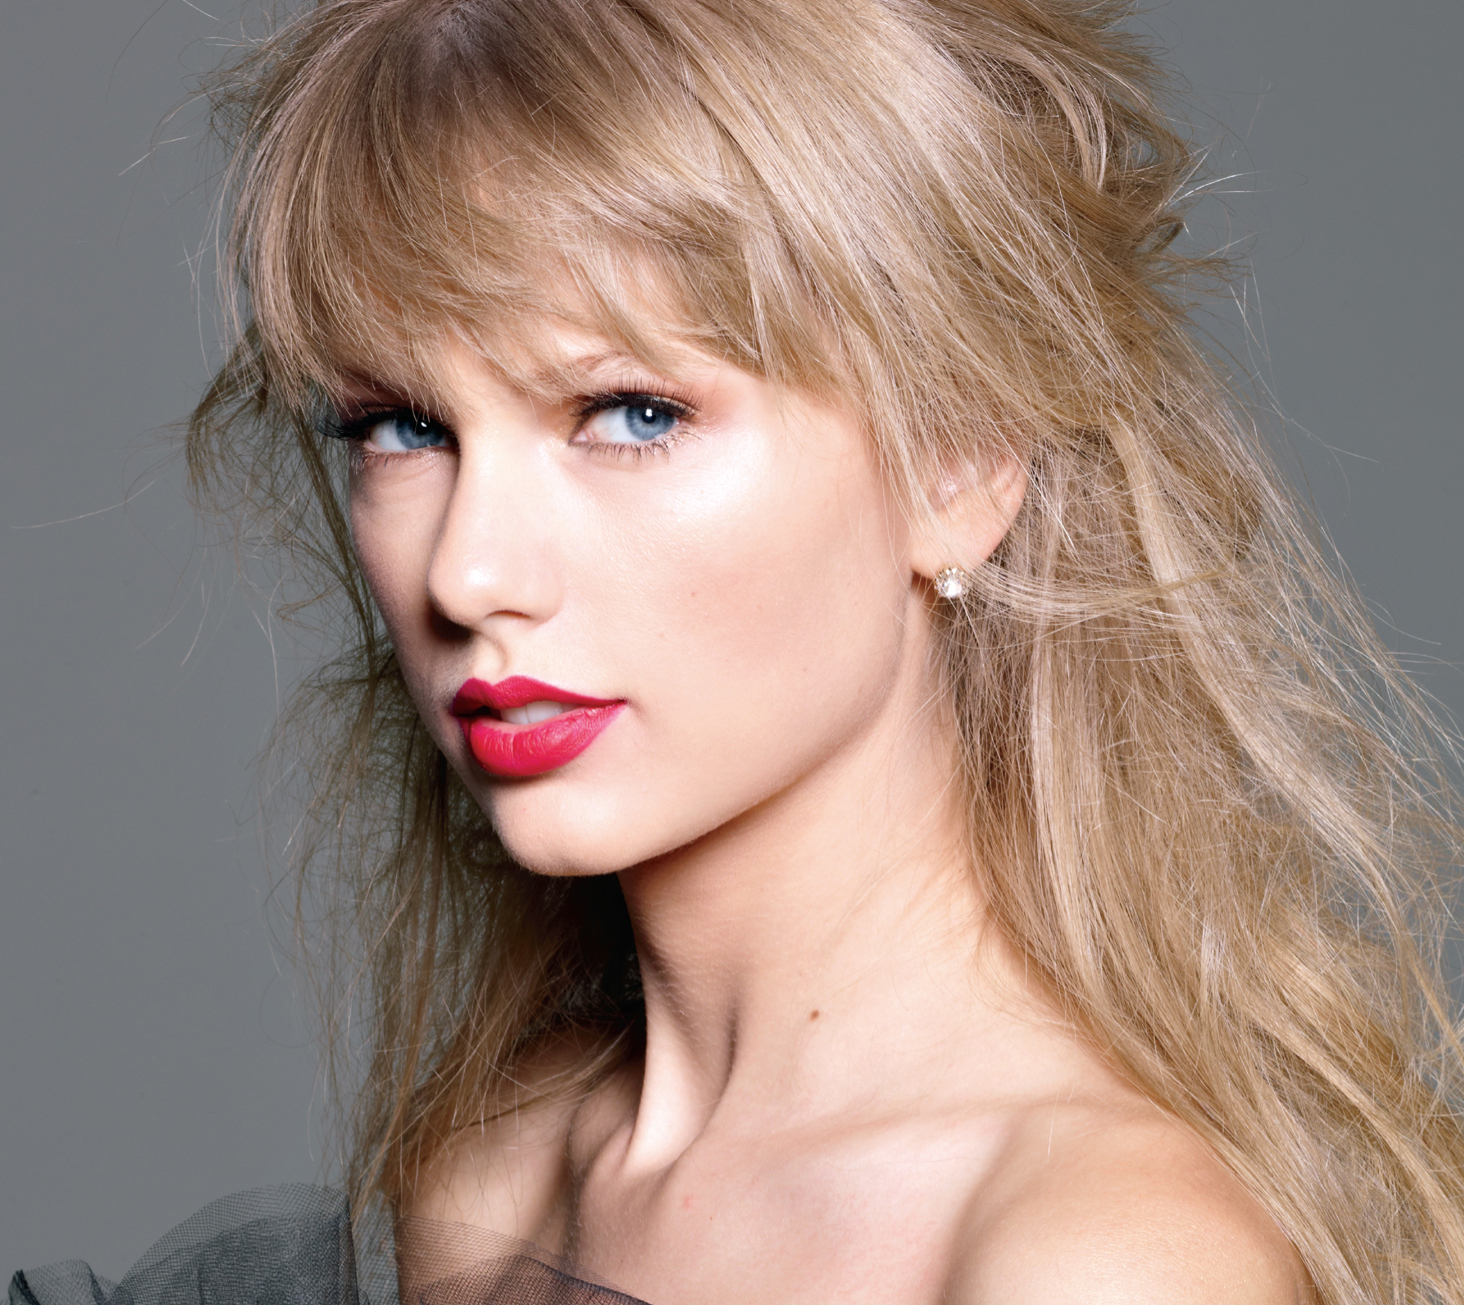 People 1464x1305 Taylor Swift singer women blue eyes blonde simple background